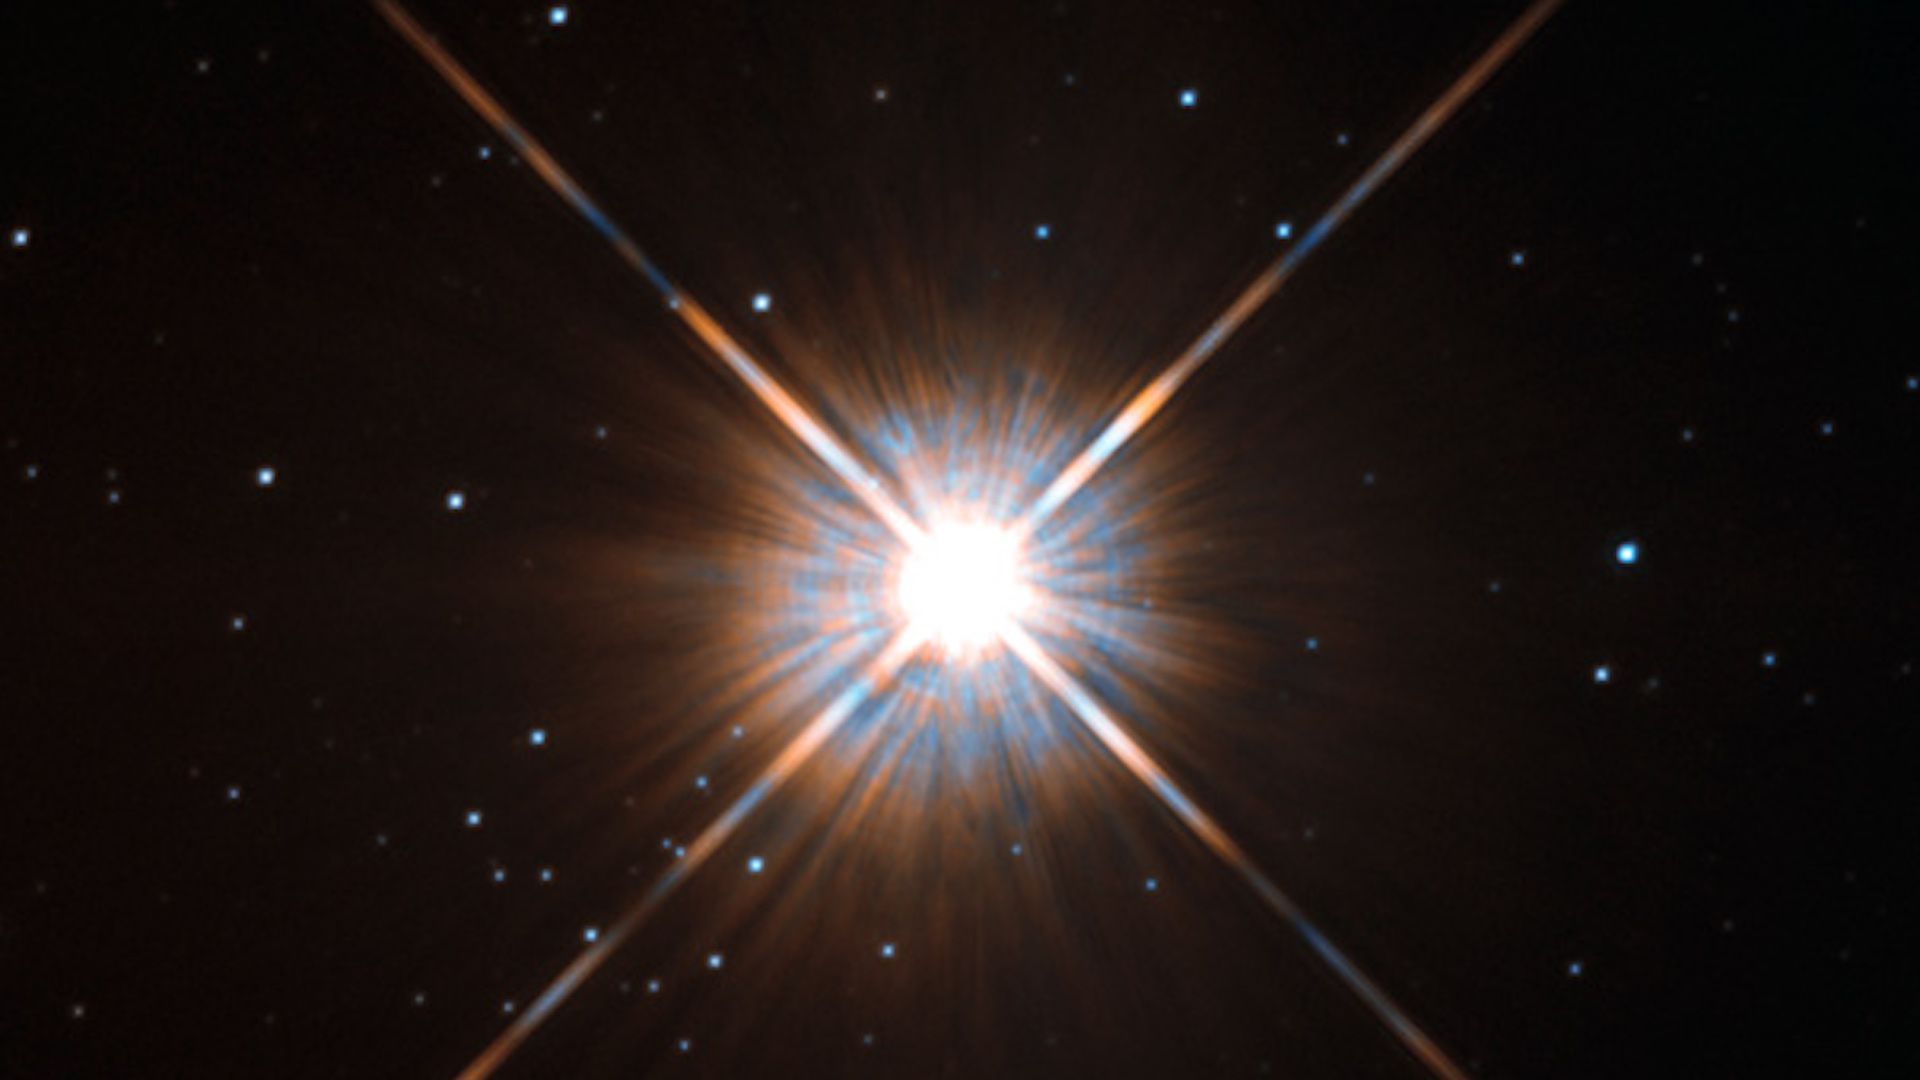 Proxima Centauri seen by the Hubble Space Telescope. Photo: NASA/ESA